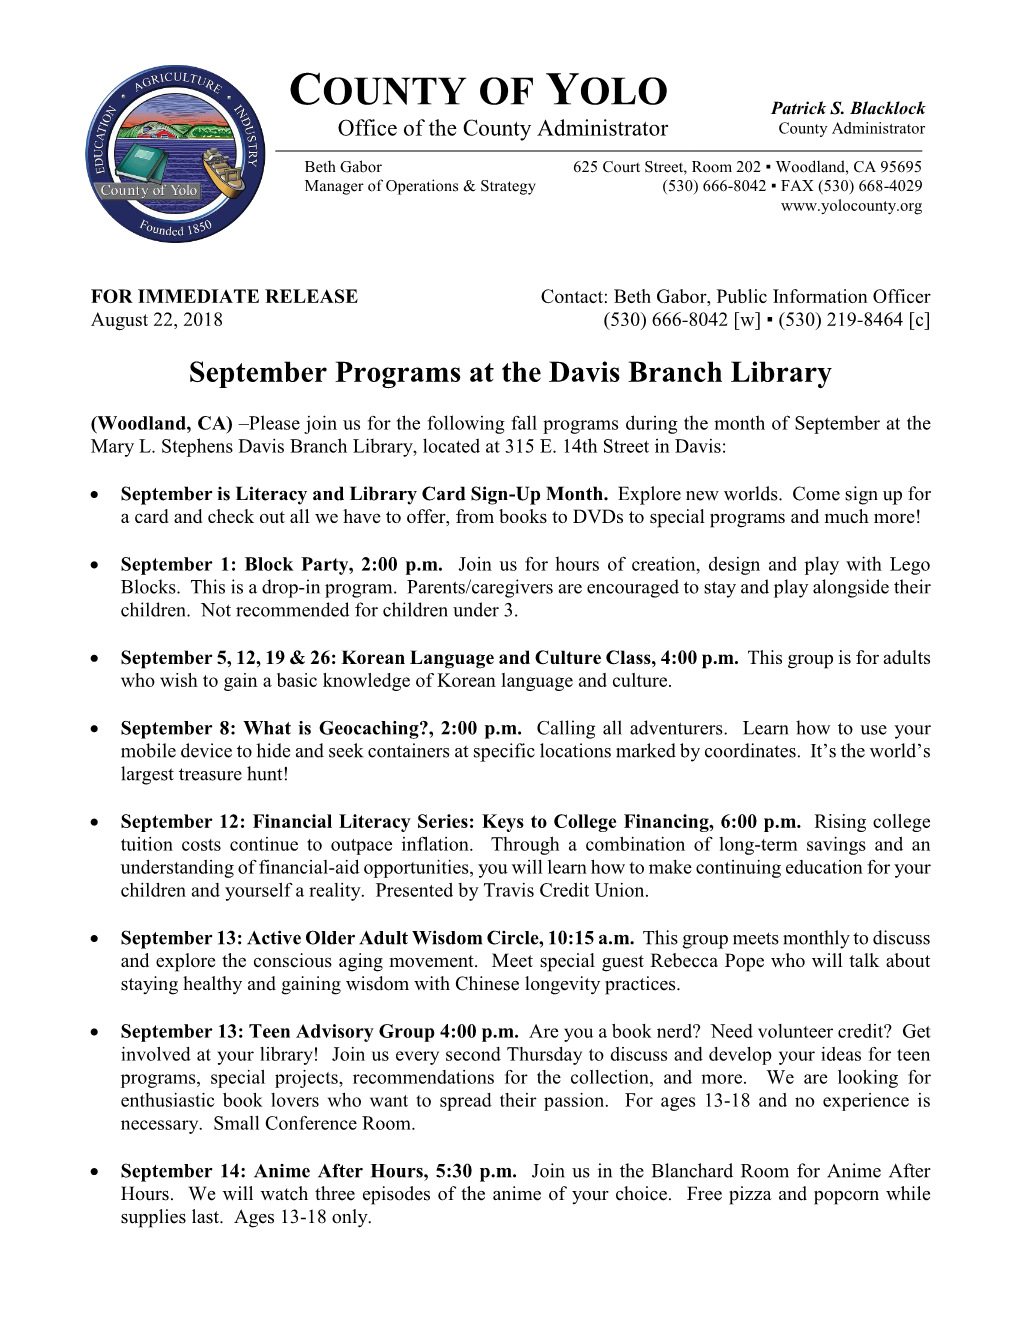 September Programs at the Davis Branch Library